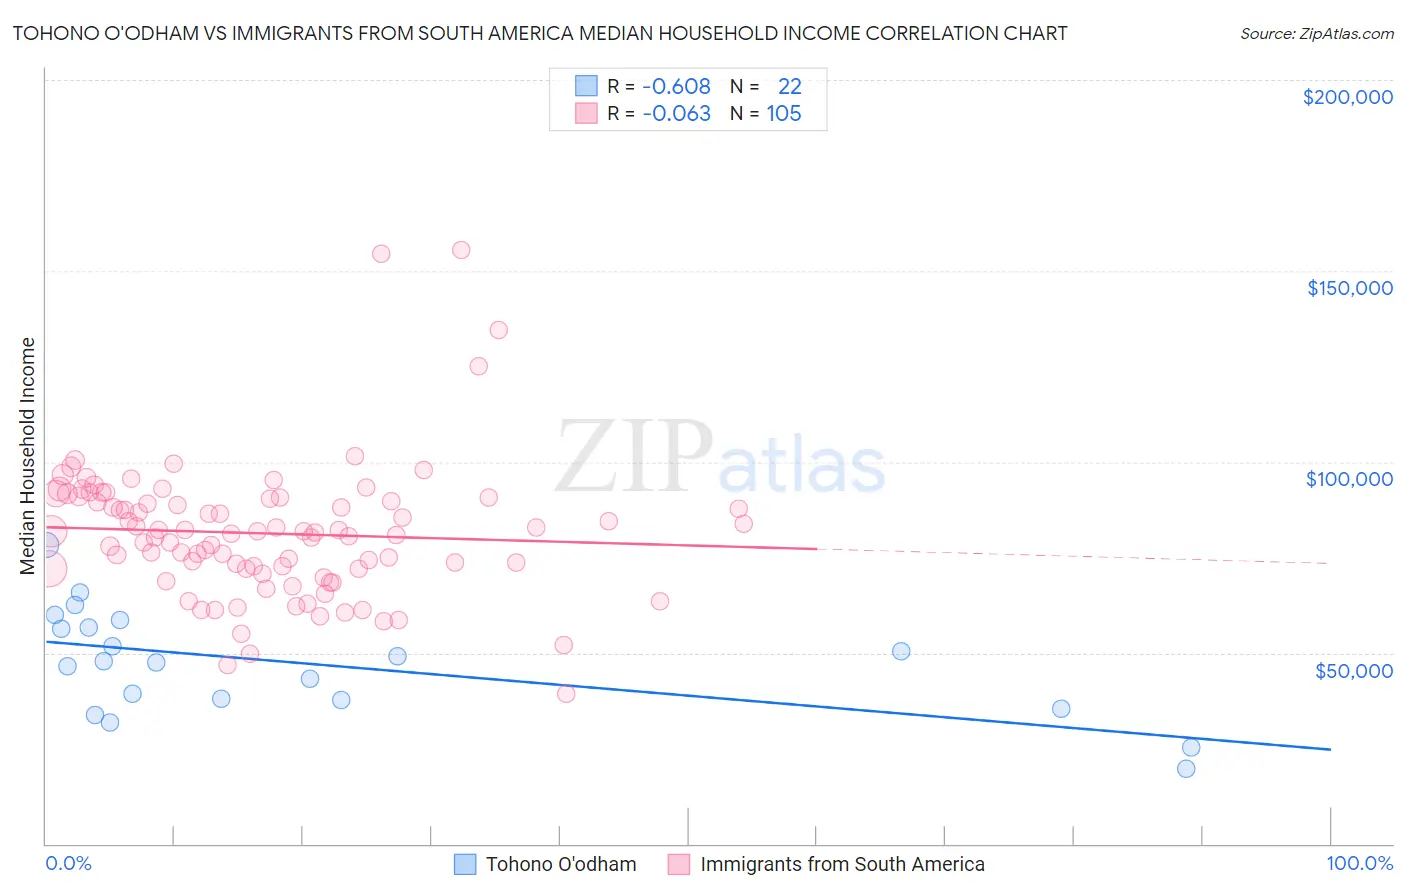 Tohono O'odham vs Immigrants from South America Median Household Income